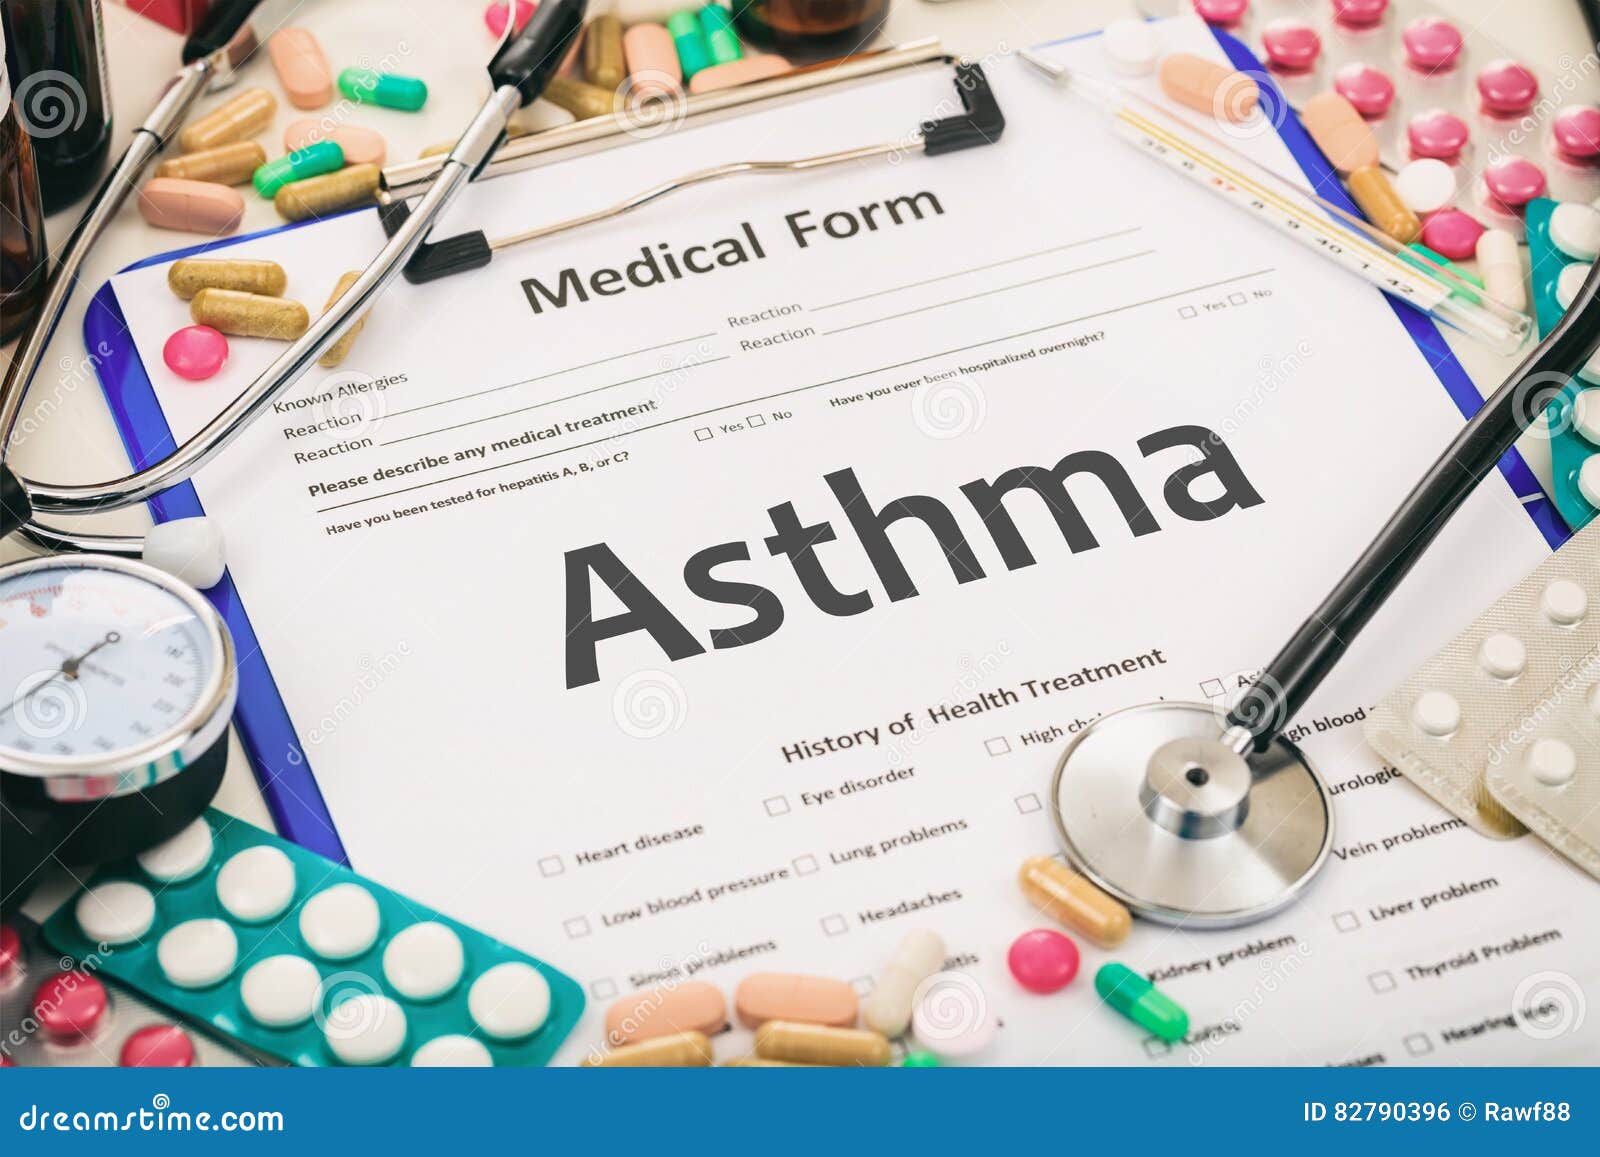 medical form, diagnosis asthma